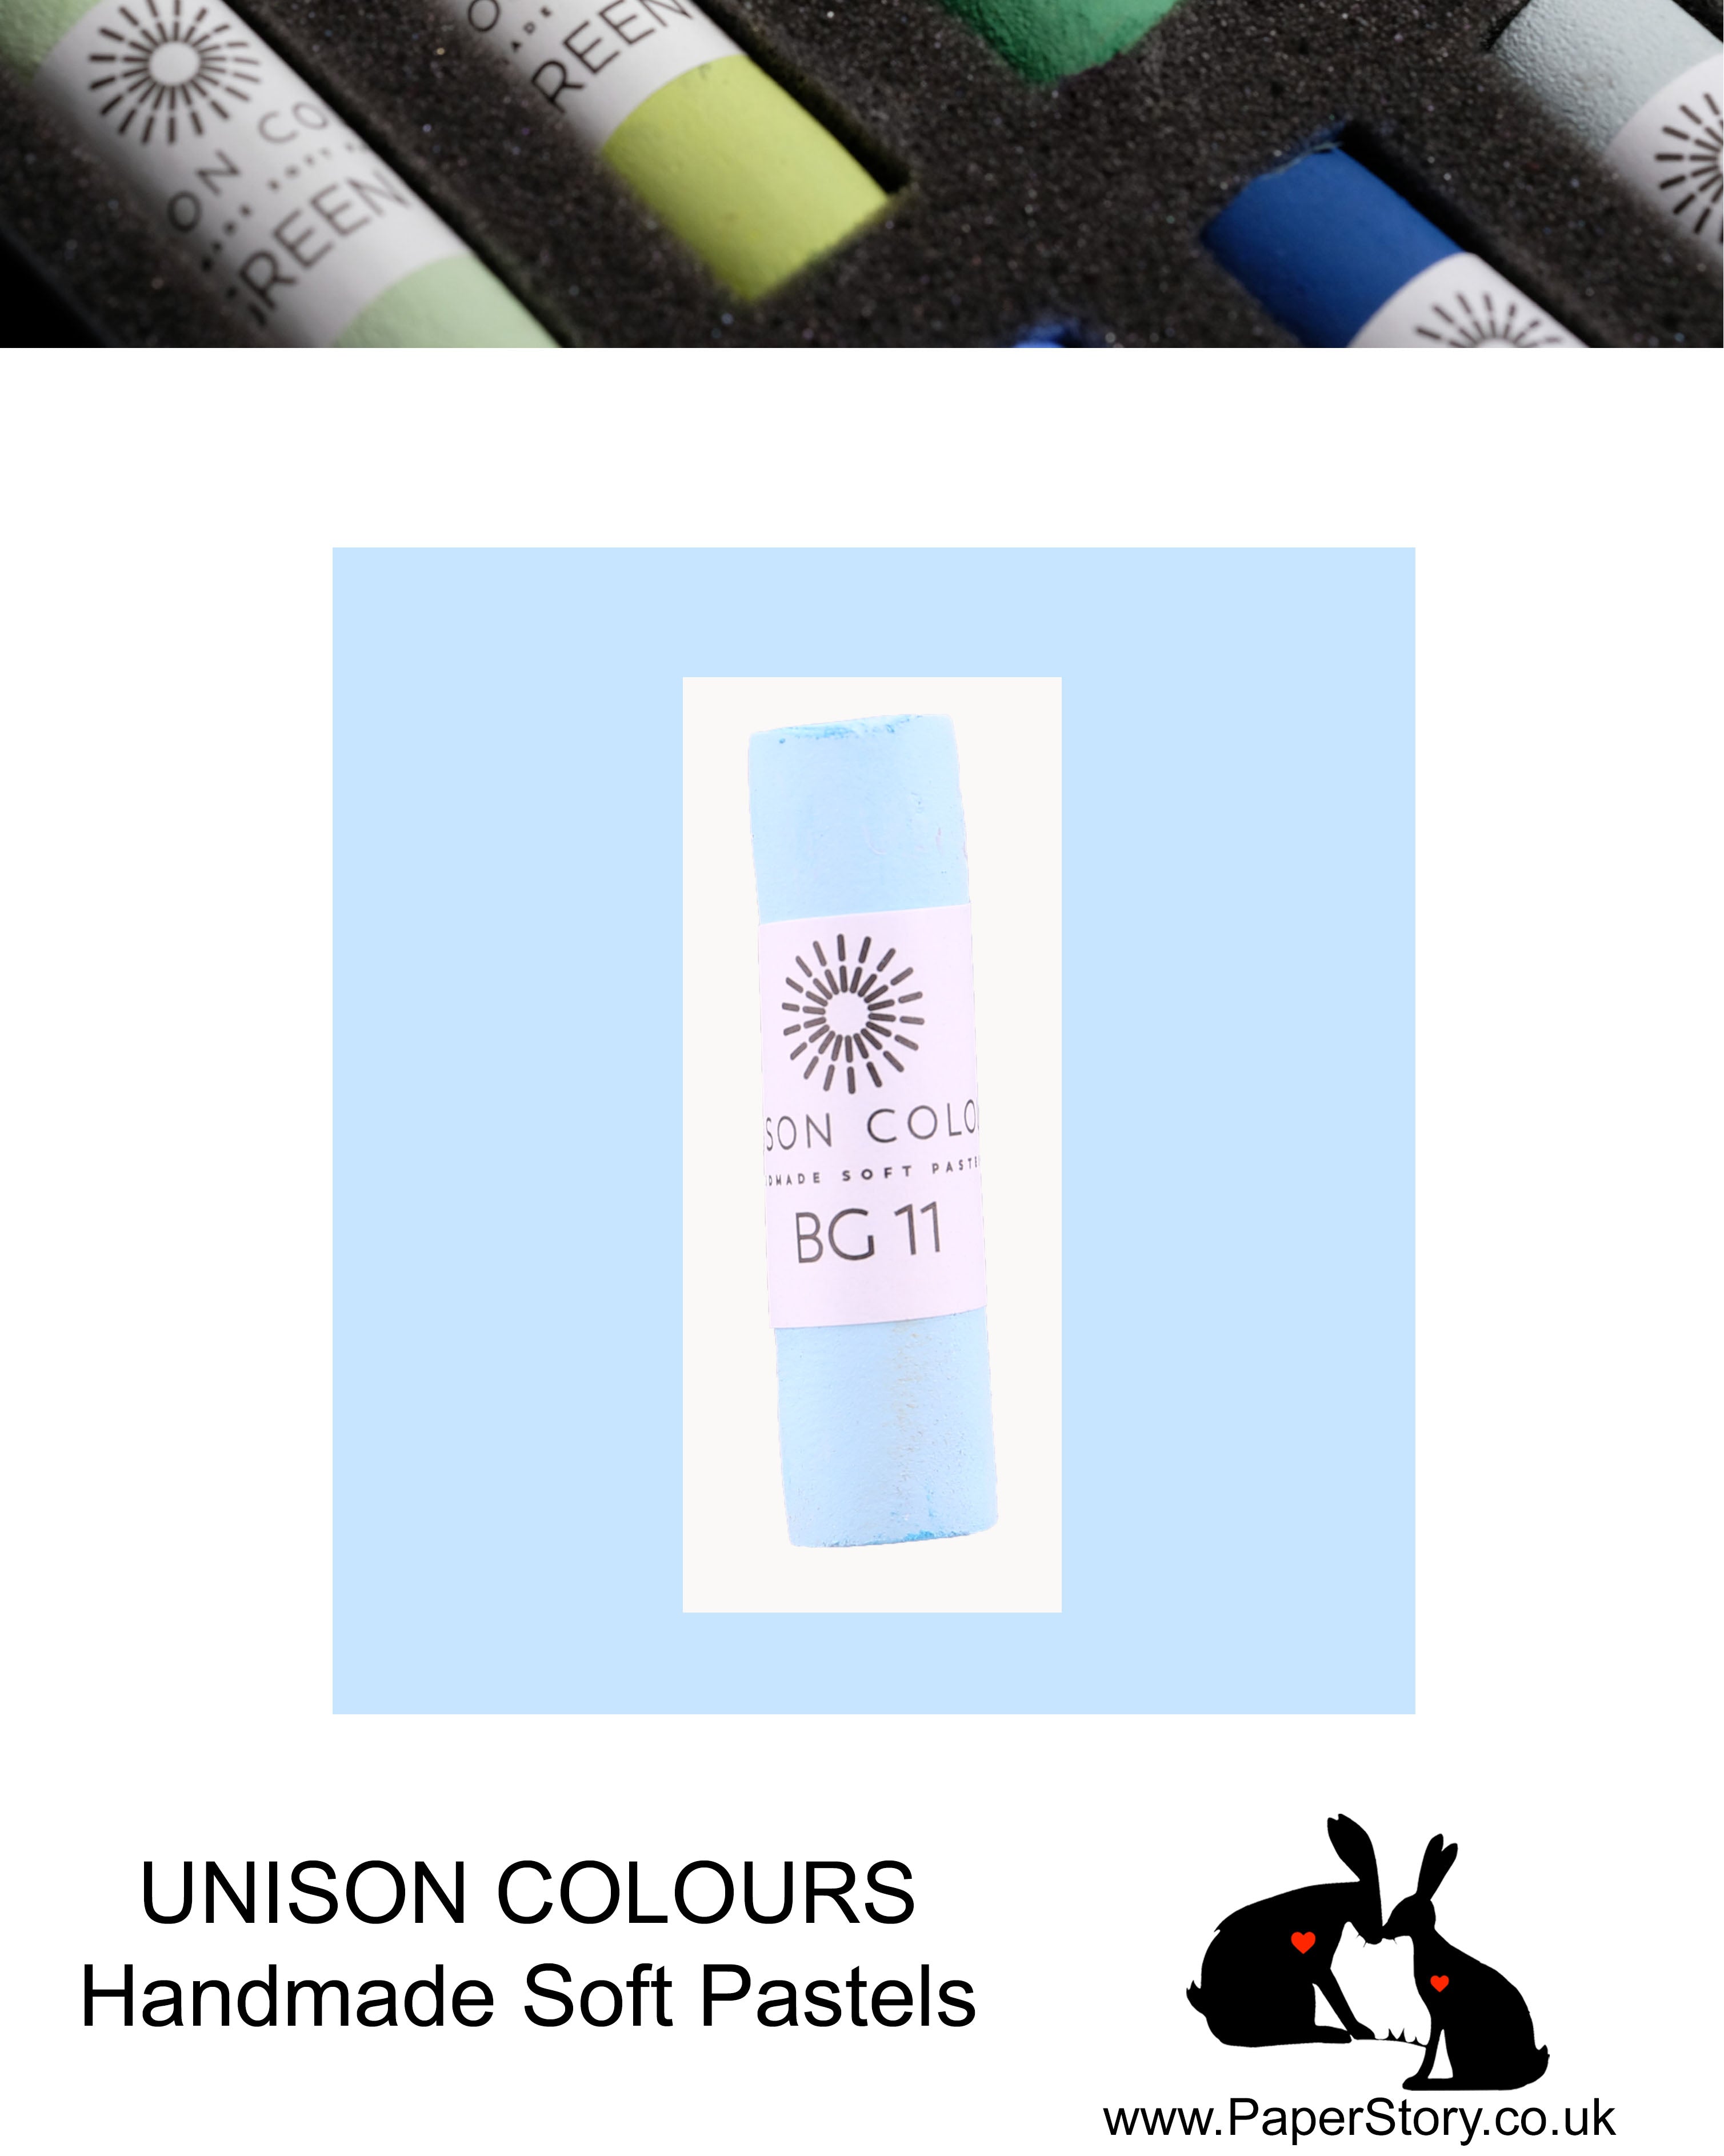 Unison Colour Handmade Soft Pastels Blue Green 11 - Size Regular